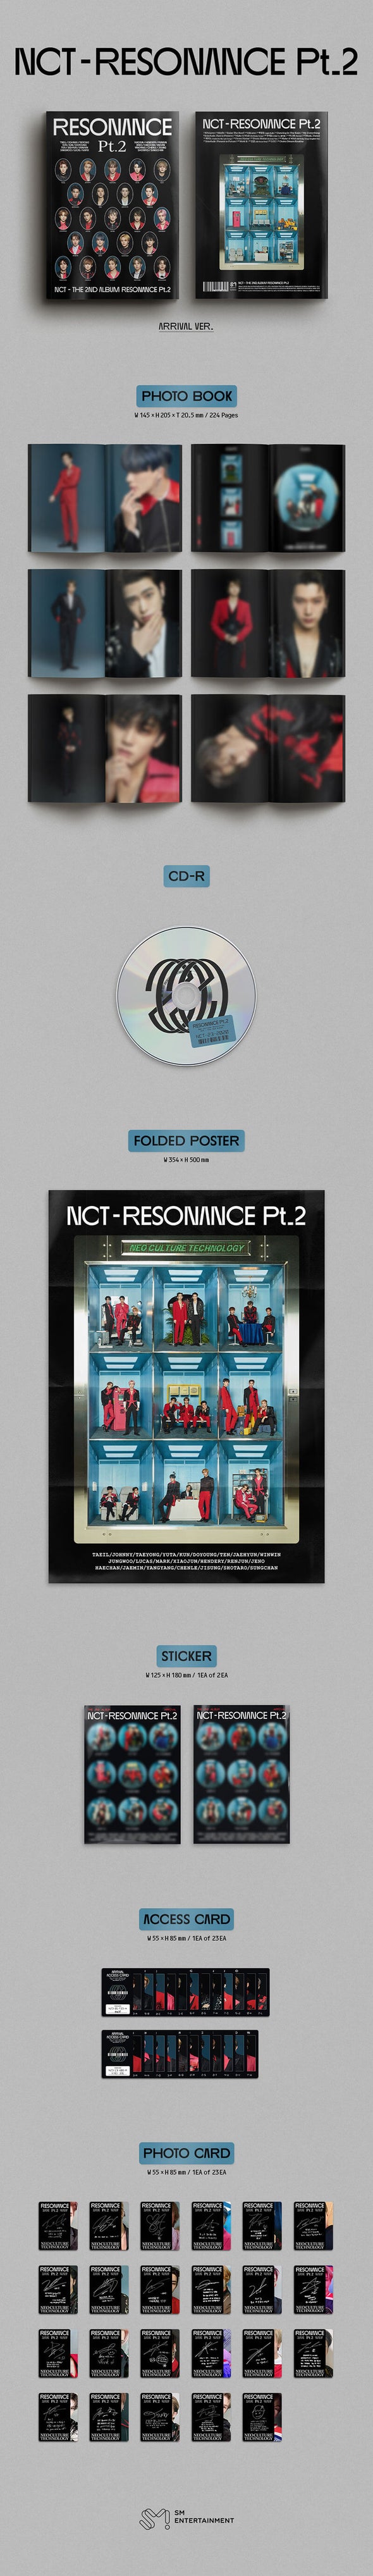 NCT - Resonance Pt.2 The 2nd Album